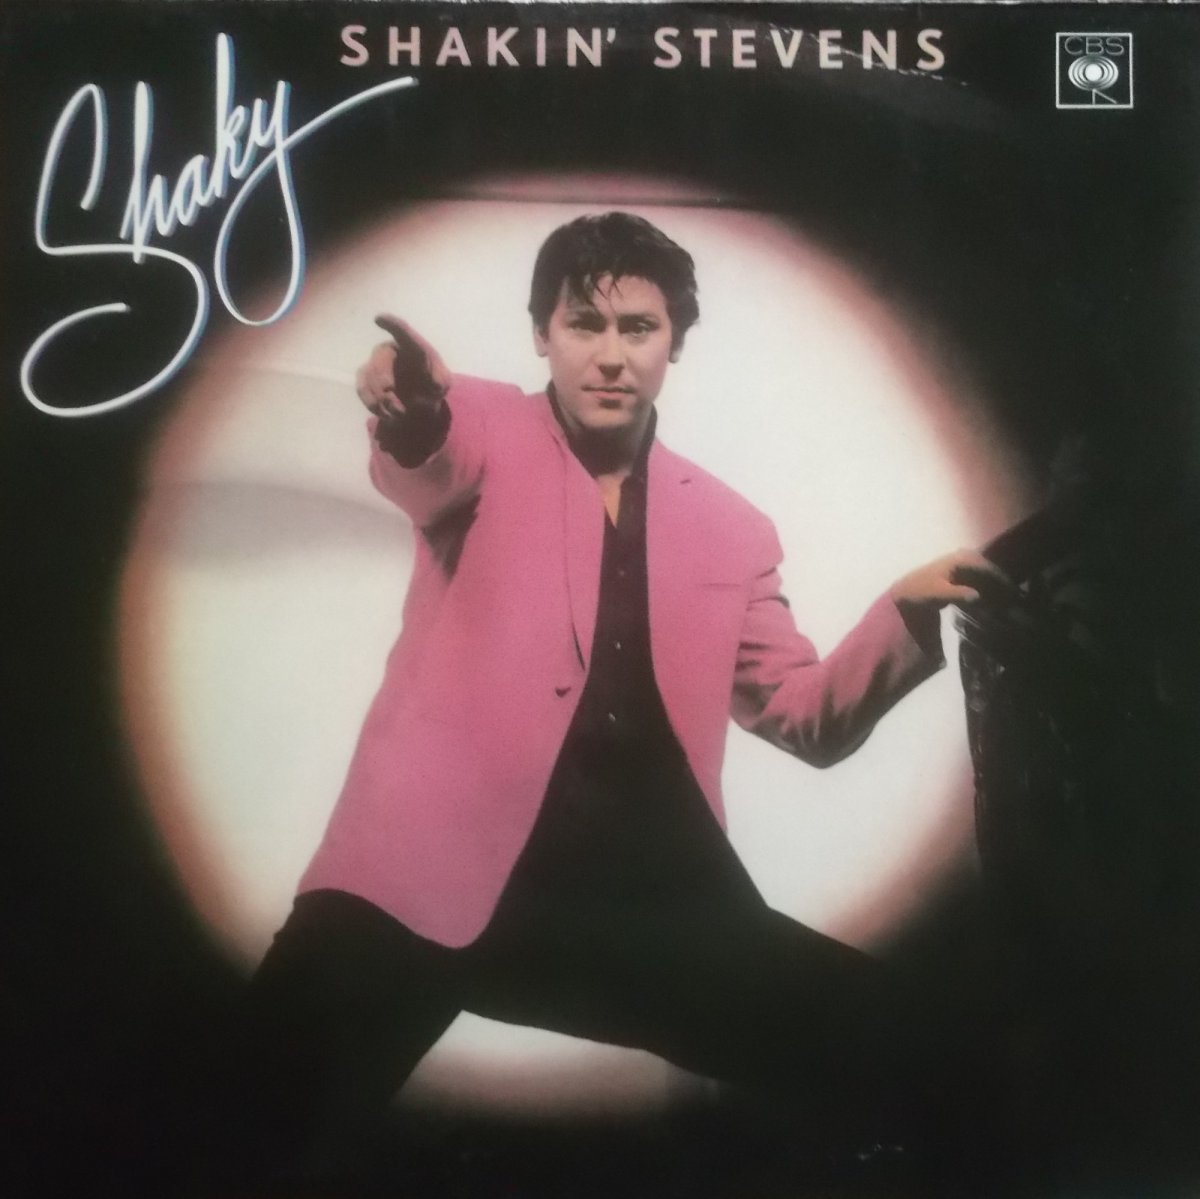 Shakin' Stevens – Shaky